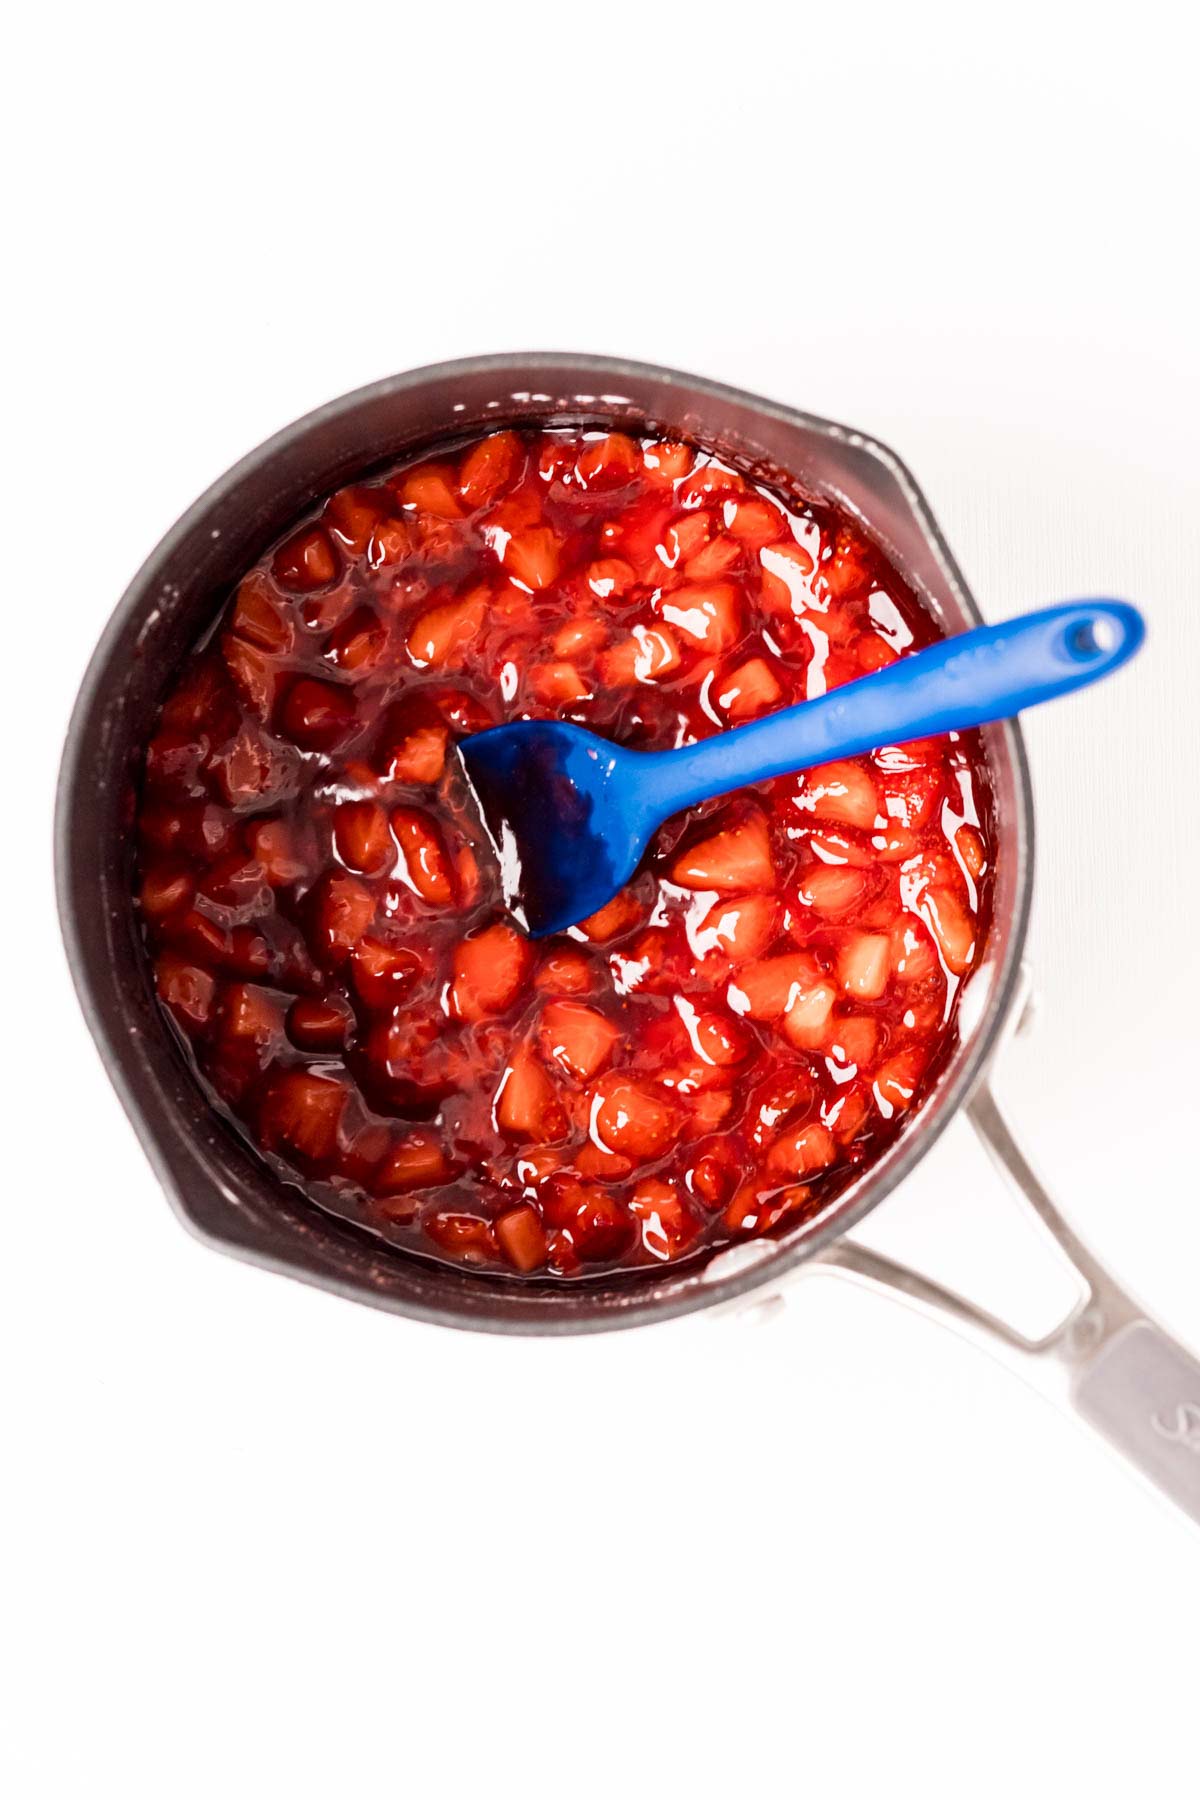 strawberry sauce in a saucepan